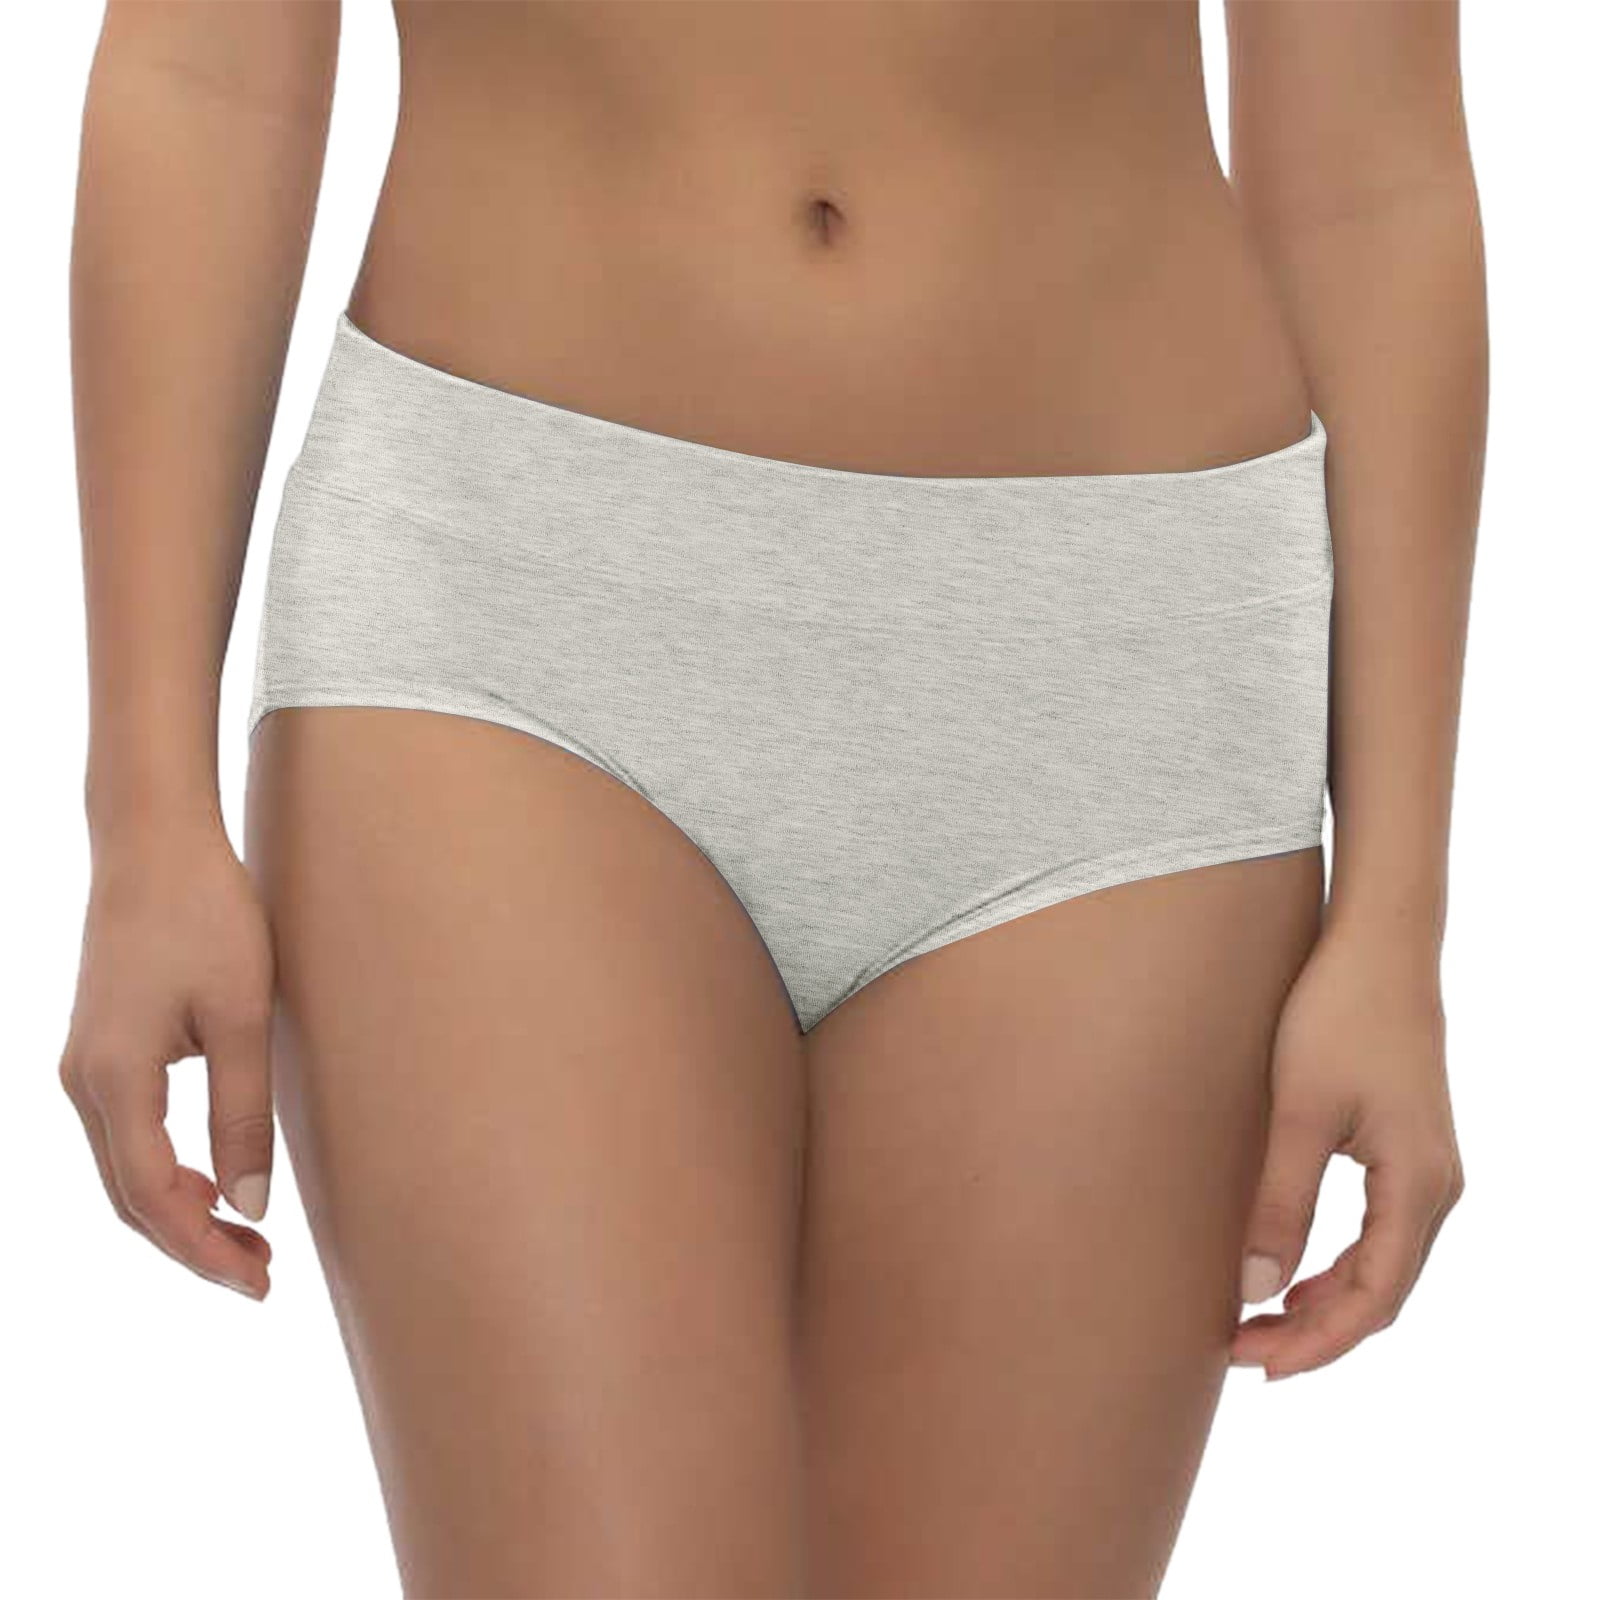 SHINEMART Ladies Underwear Cotton Panties Plus Size Pack of 6 Multicolor